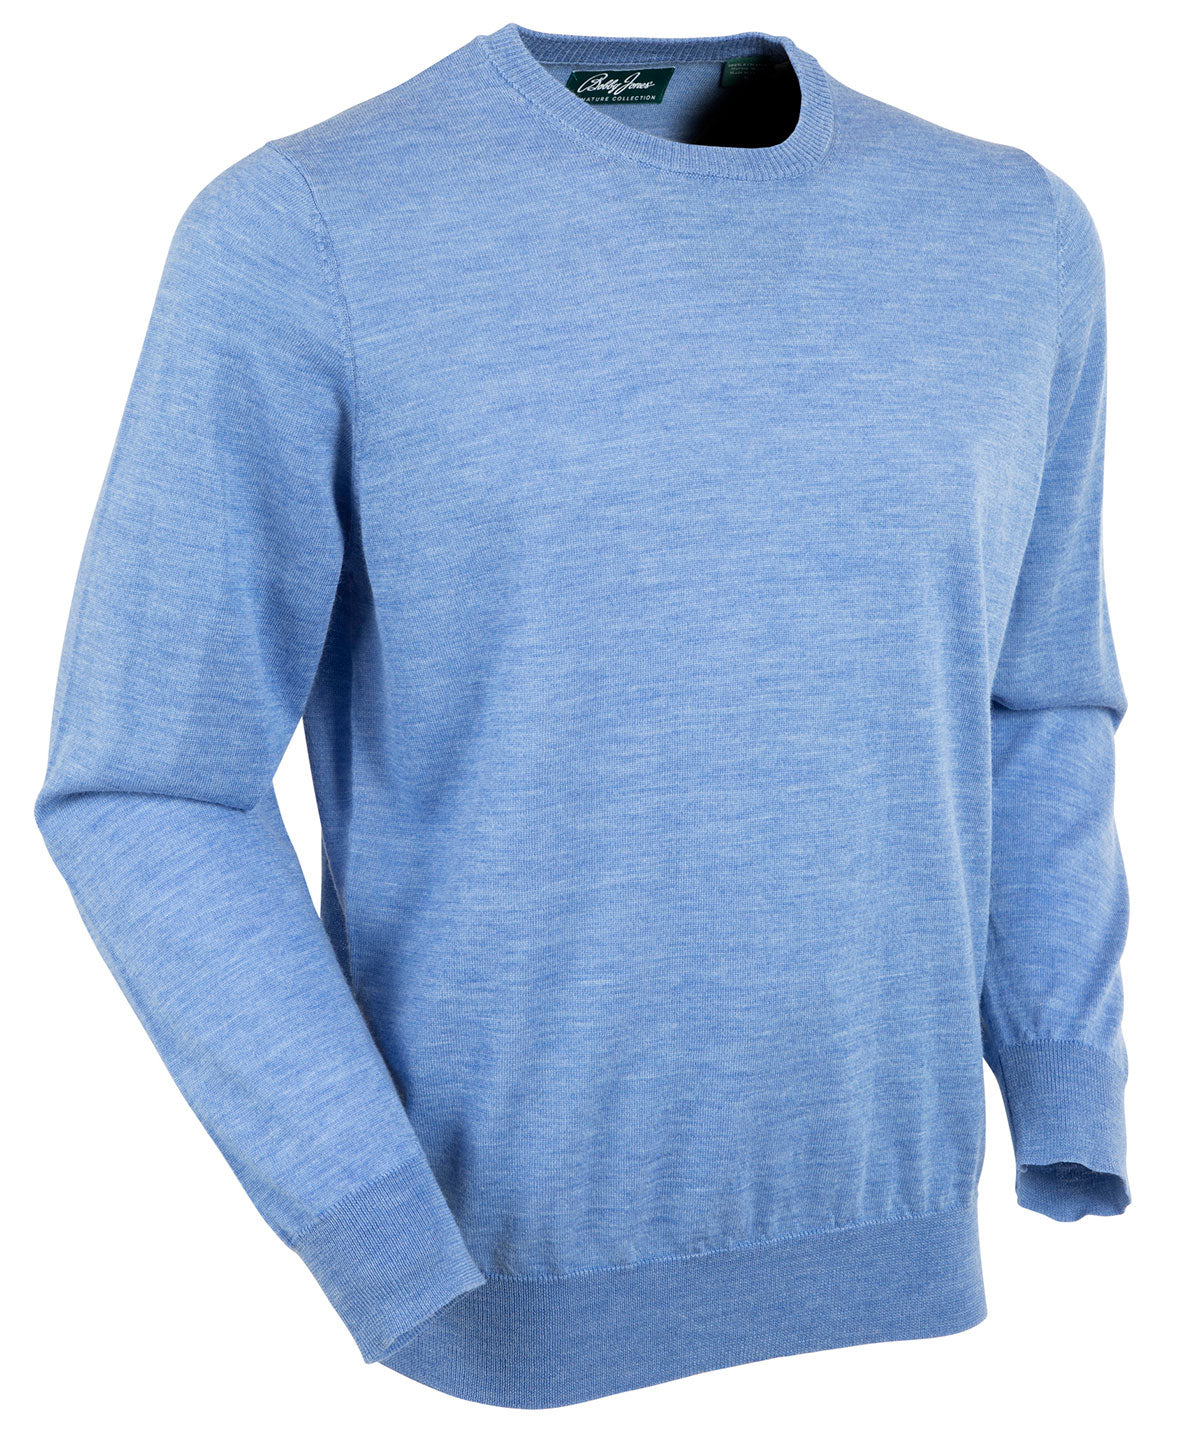 Signature Ultra Light 100% Merino Wool Crewneck Sweater